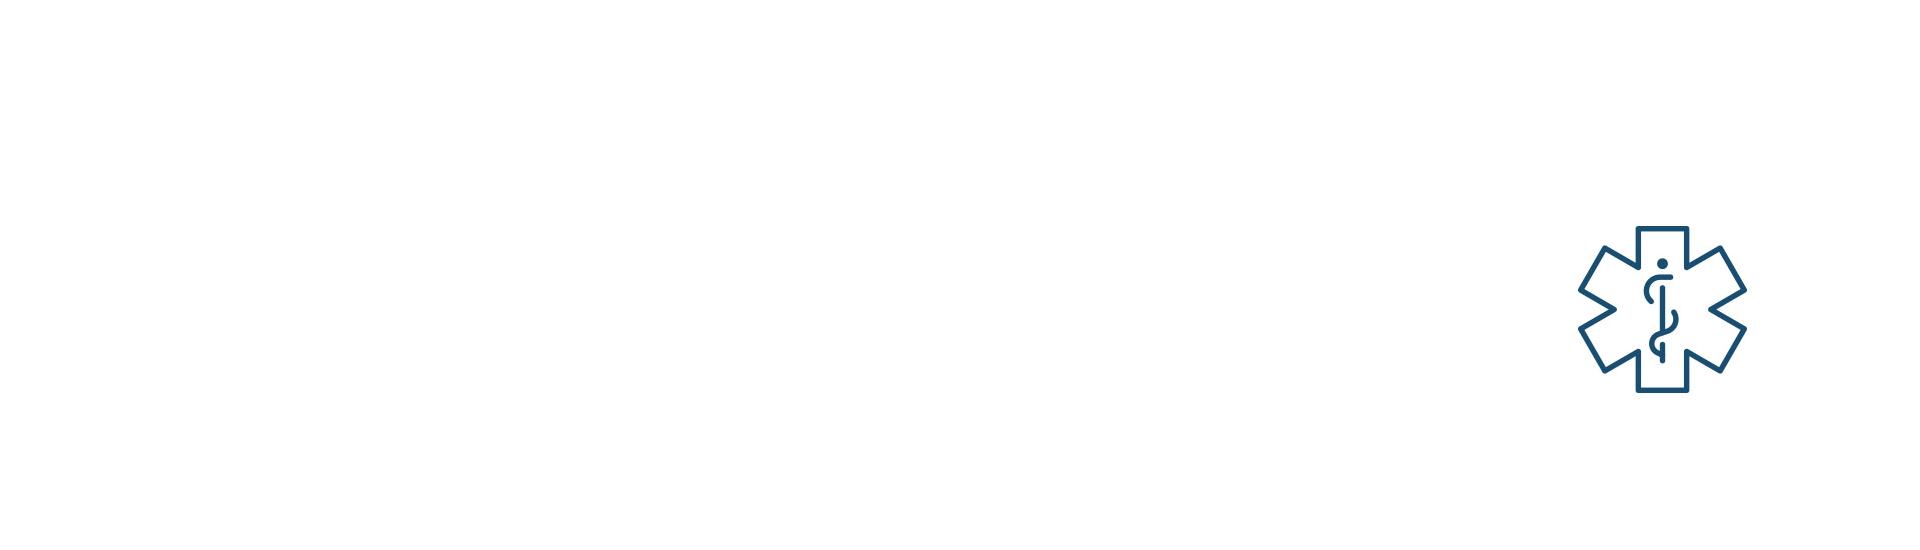 Benefits solution